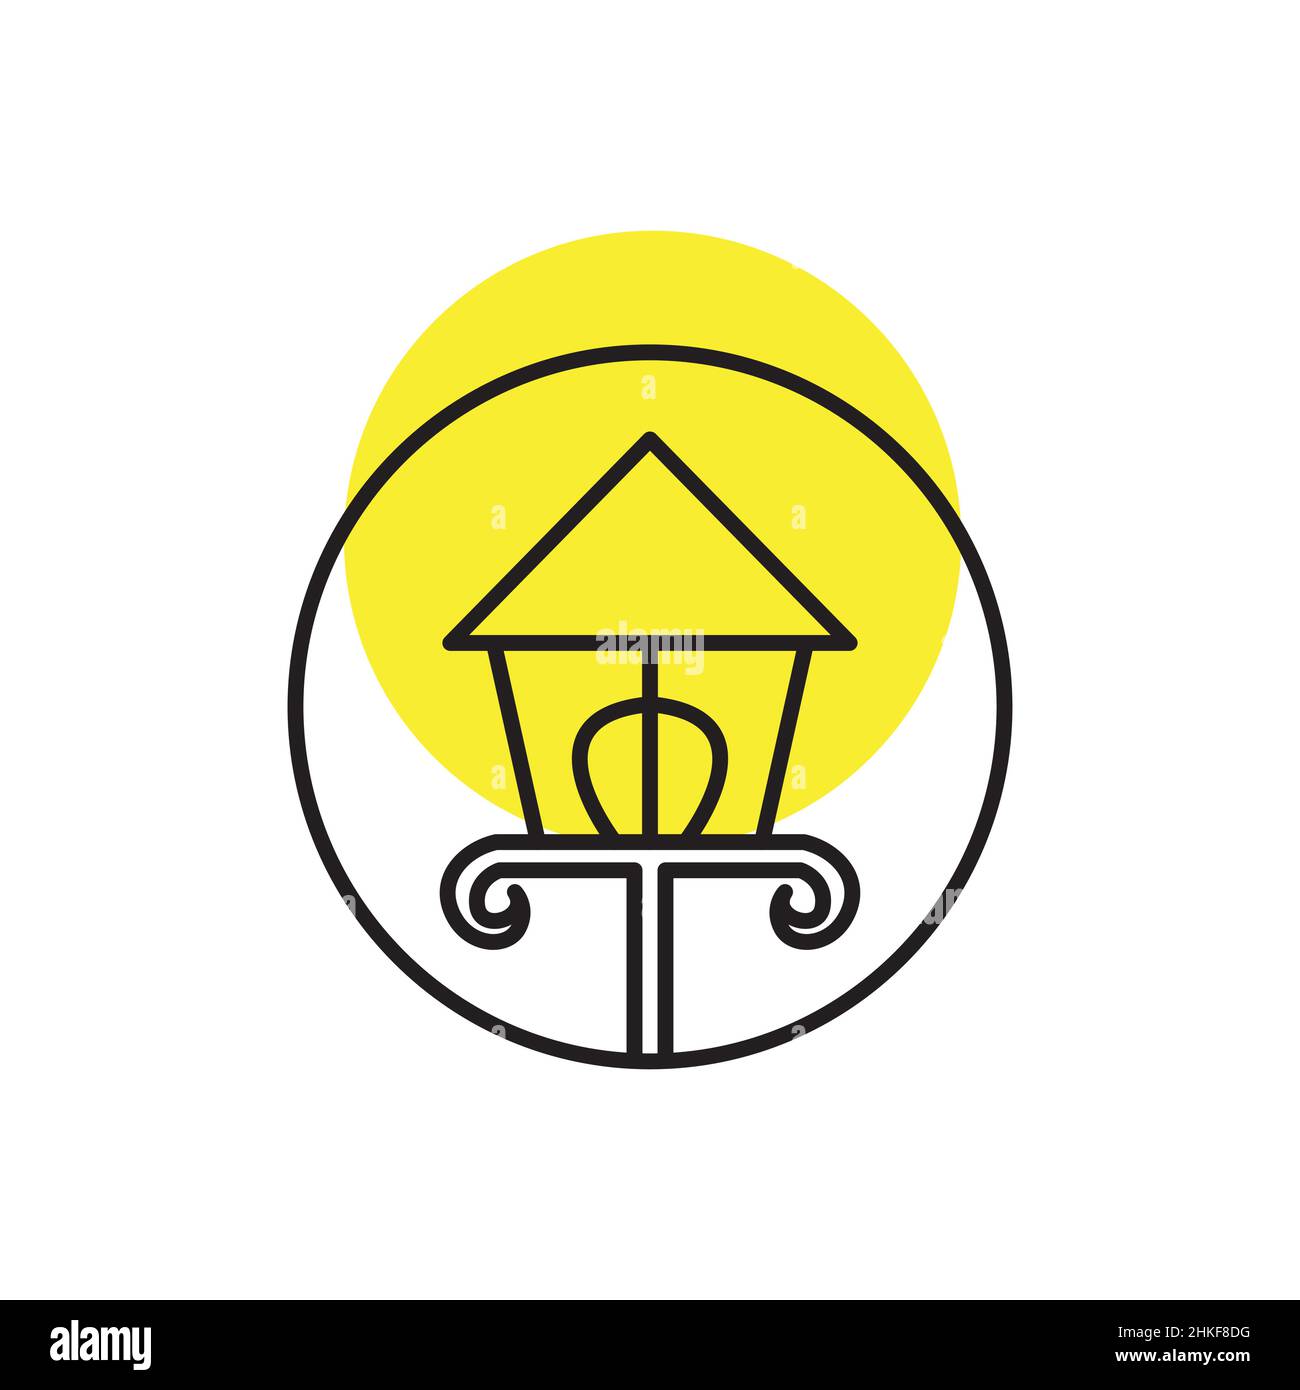 line decorative outdoor lightning modern logo design, vector graphic symbol icon illustration creative idea Stock Vector